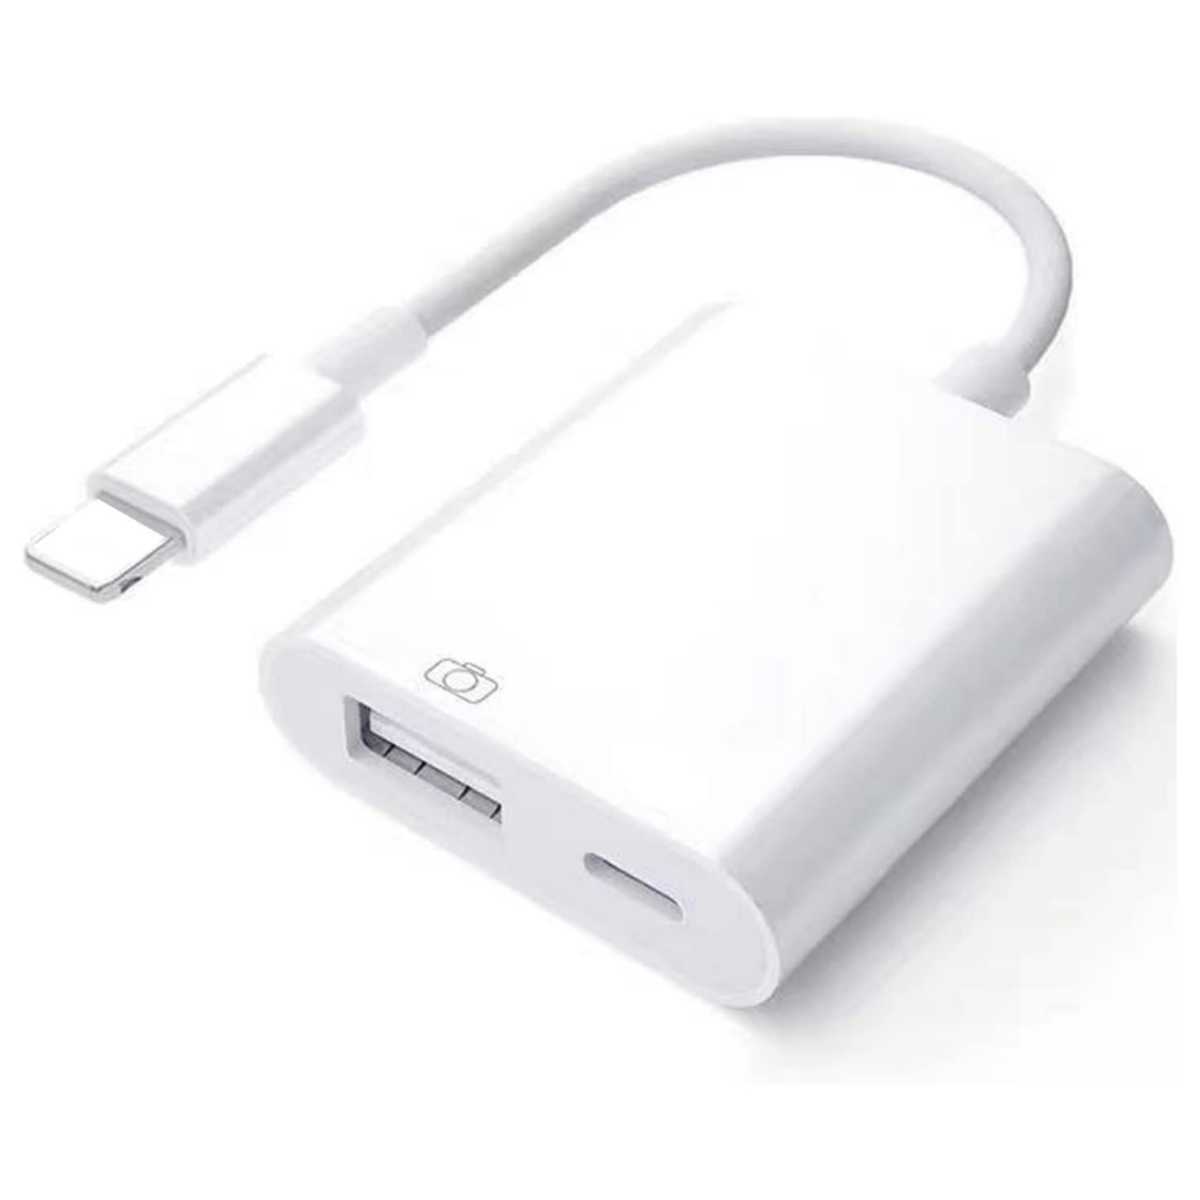 【2 in1】iPhone Lightning USBカメラアダプタ USB変換アダプタ 接続ケーブル iPhone/iPad 高速 双方向転送の画像1